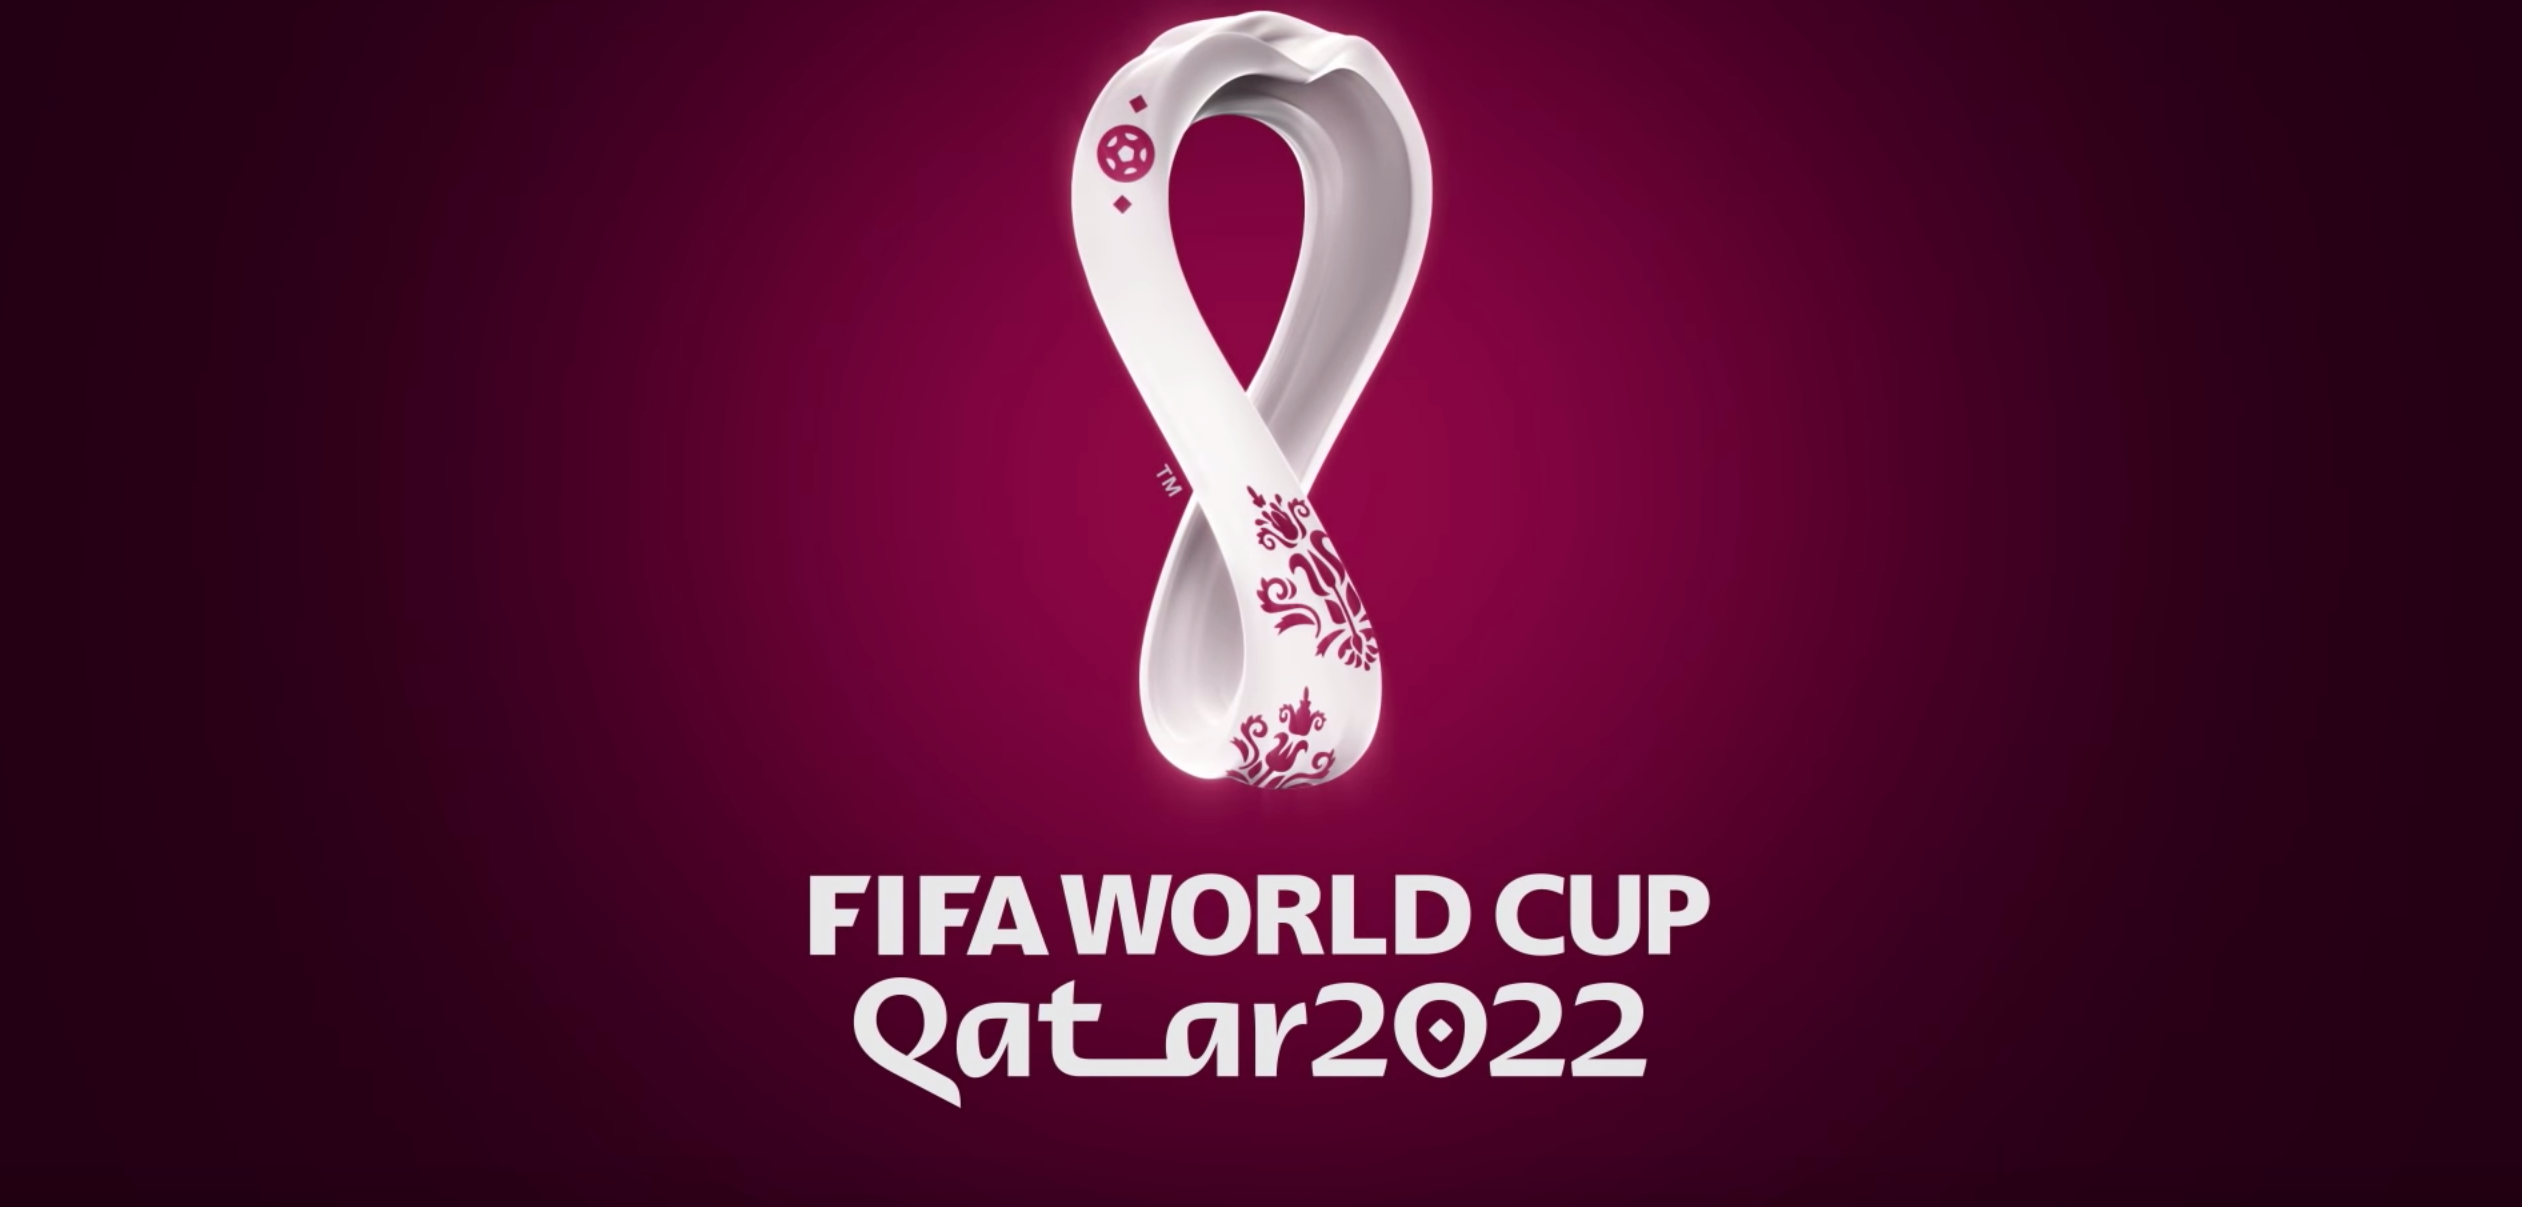 FIFA World Cup Qatar 2022 official emblem revealed.